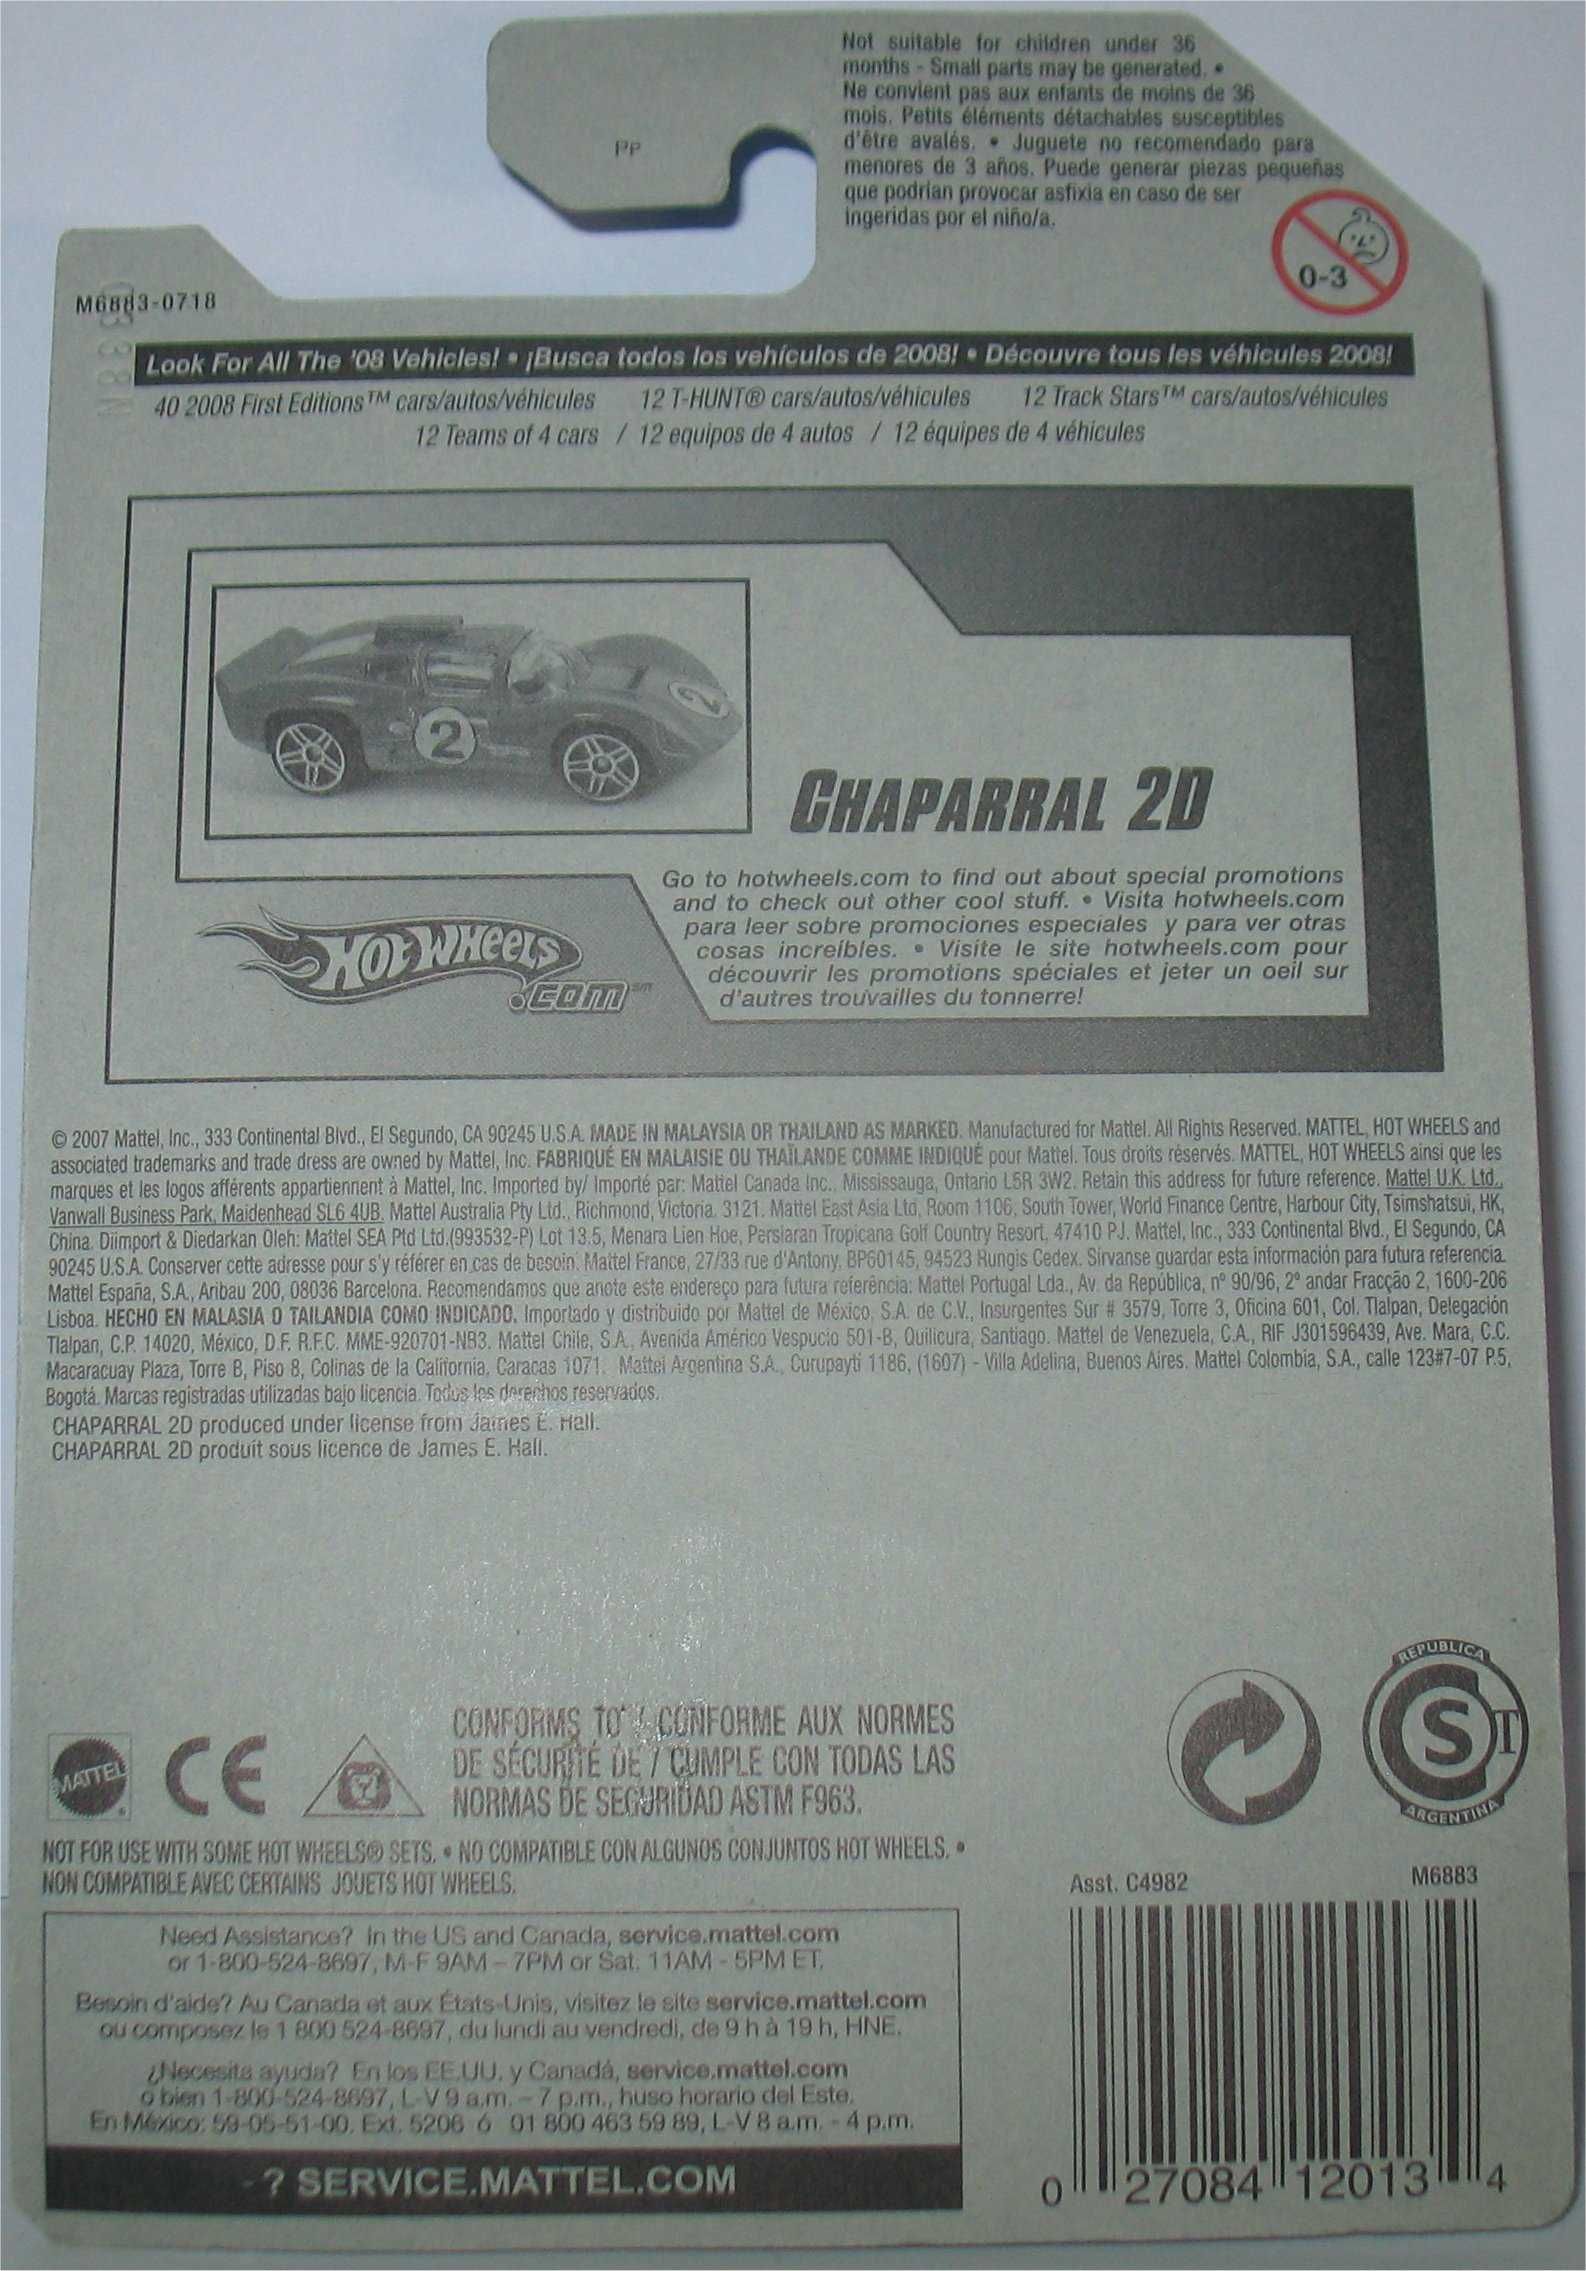 Hot Wheels - Chaparral 2D (40 Anos - 2008)